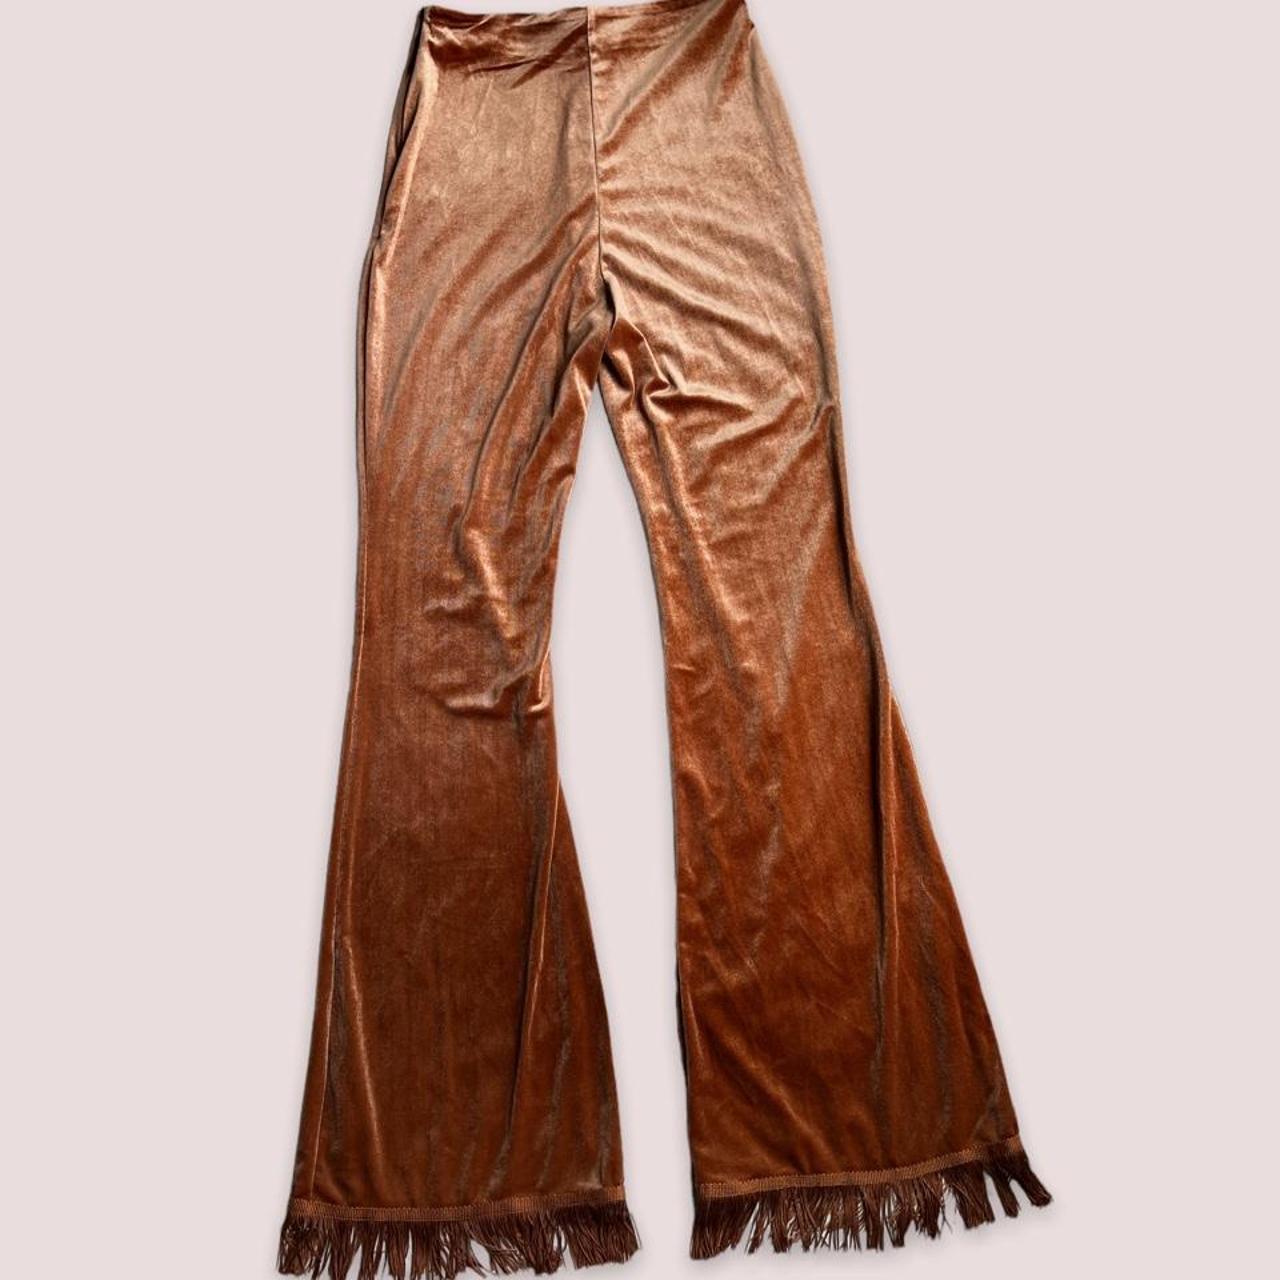 Peachy velvet fringe pants from cider! They’re brand... - Depop